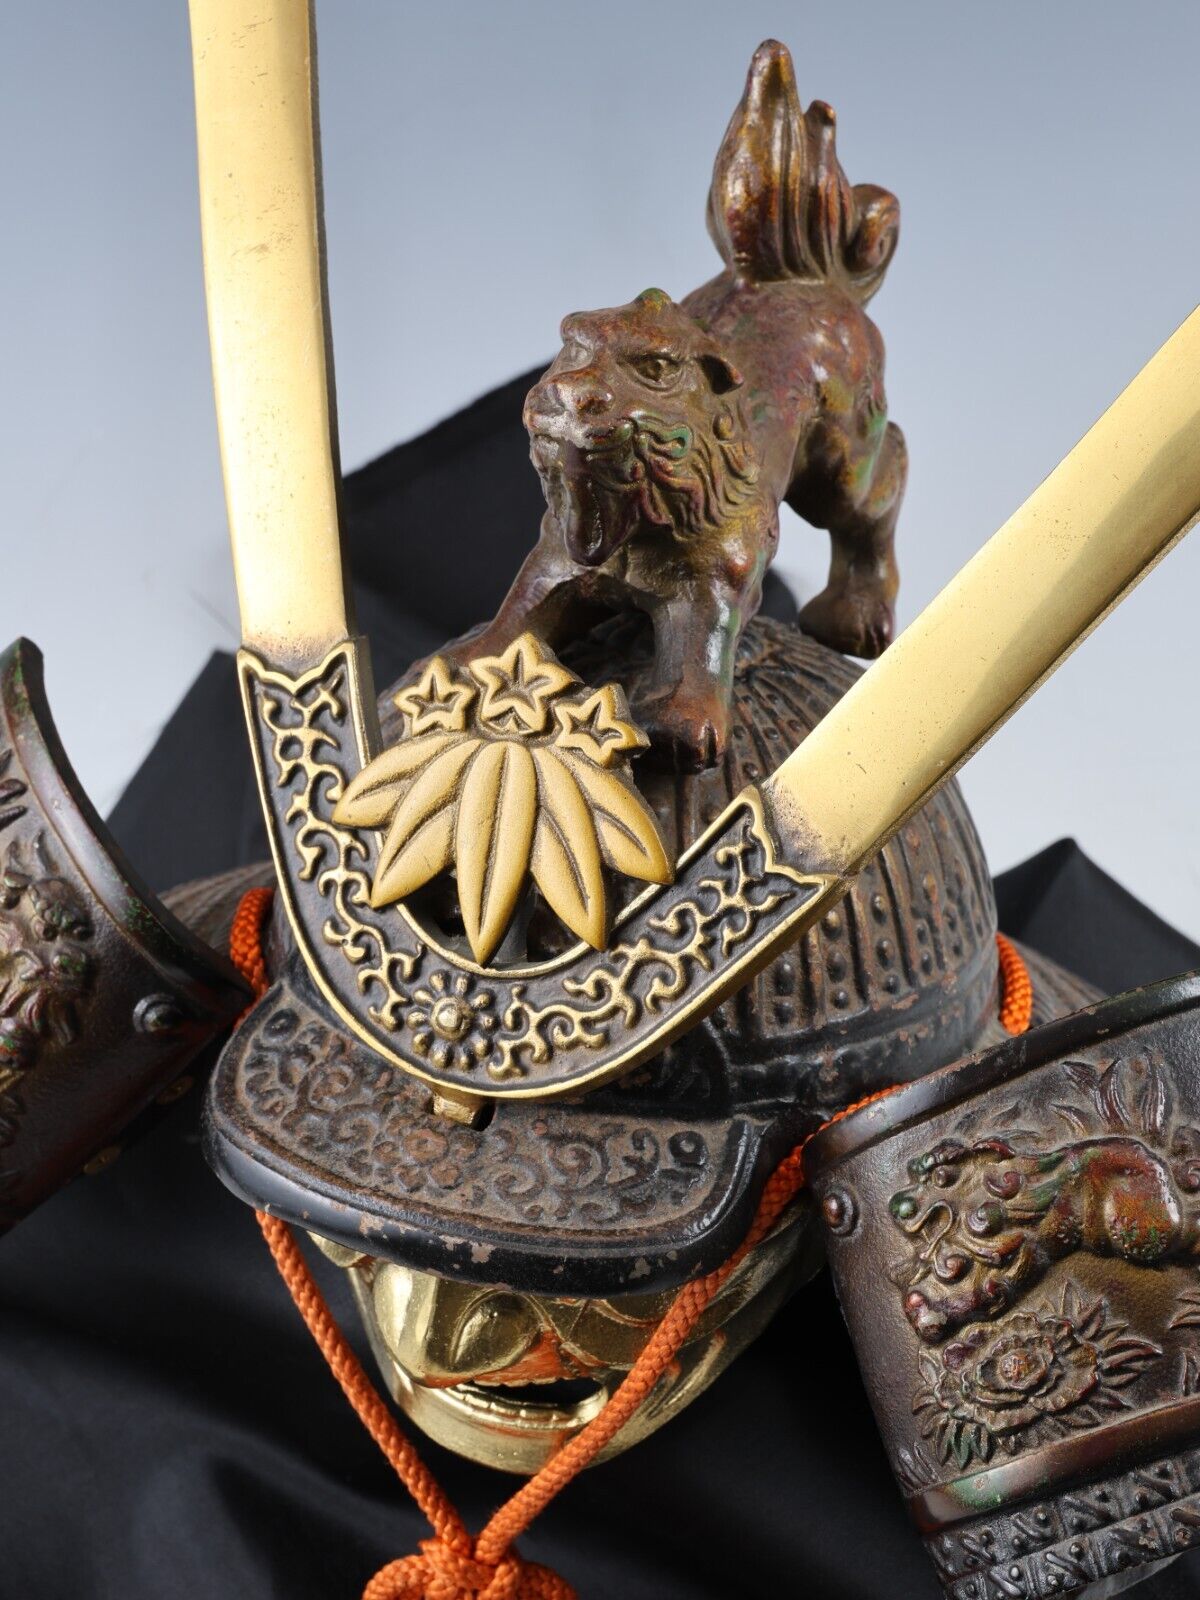 Authentic Japanese Kabuto Helmet with Tsushima Mask Antique Samurai Headgear.